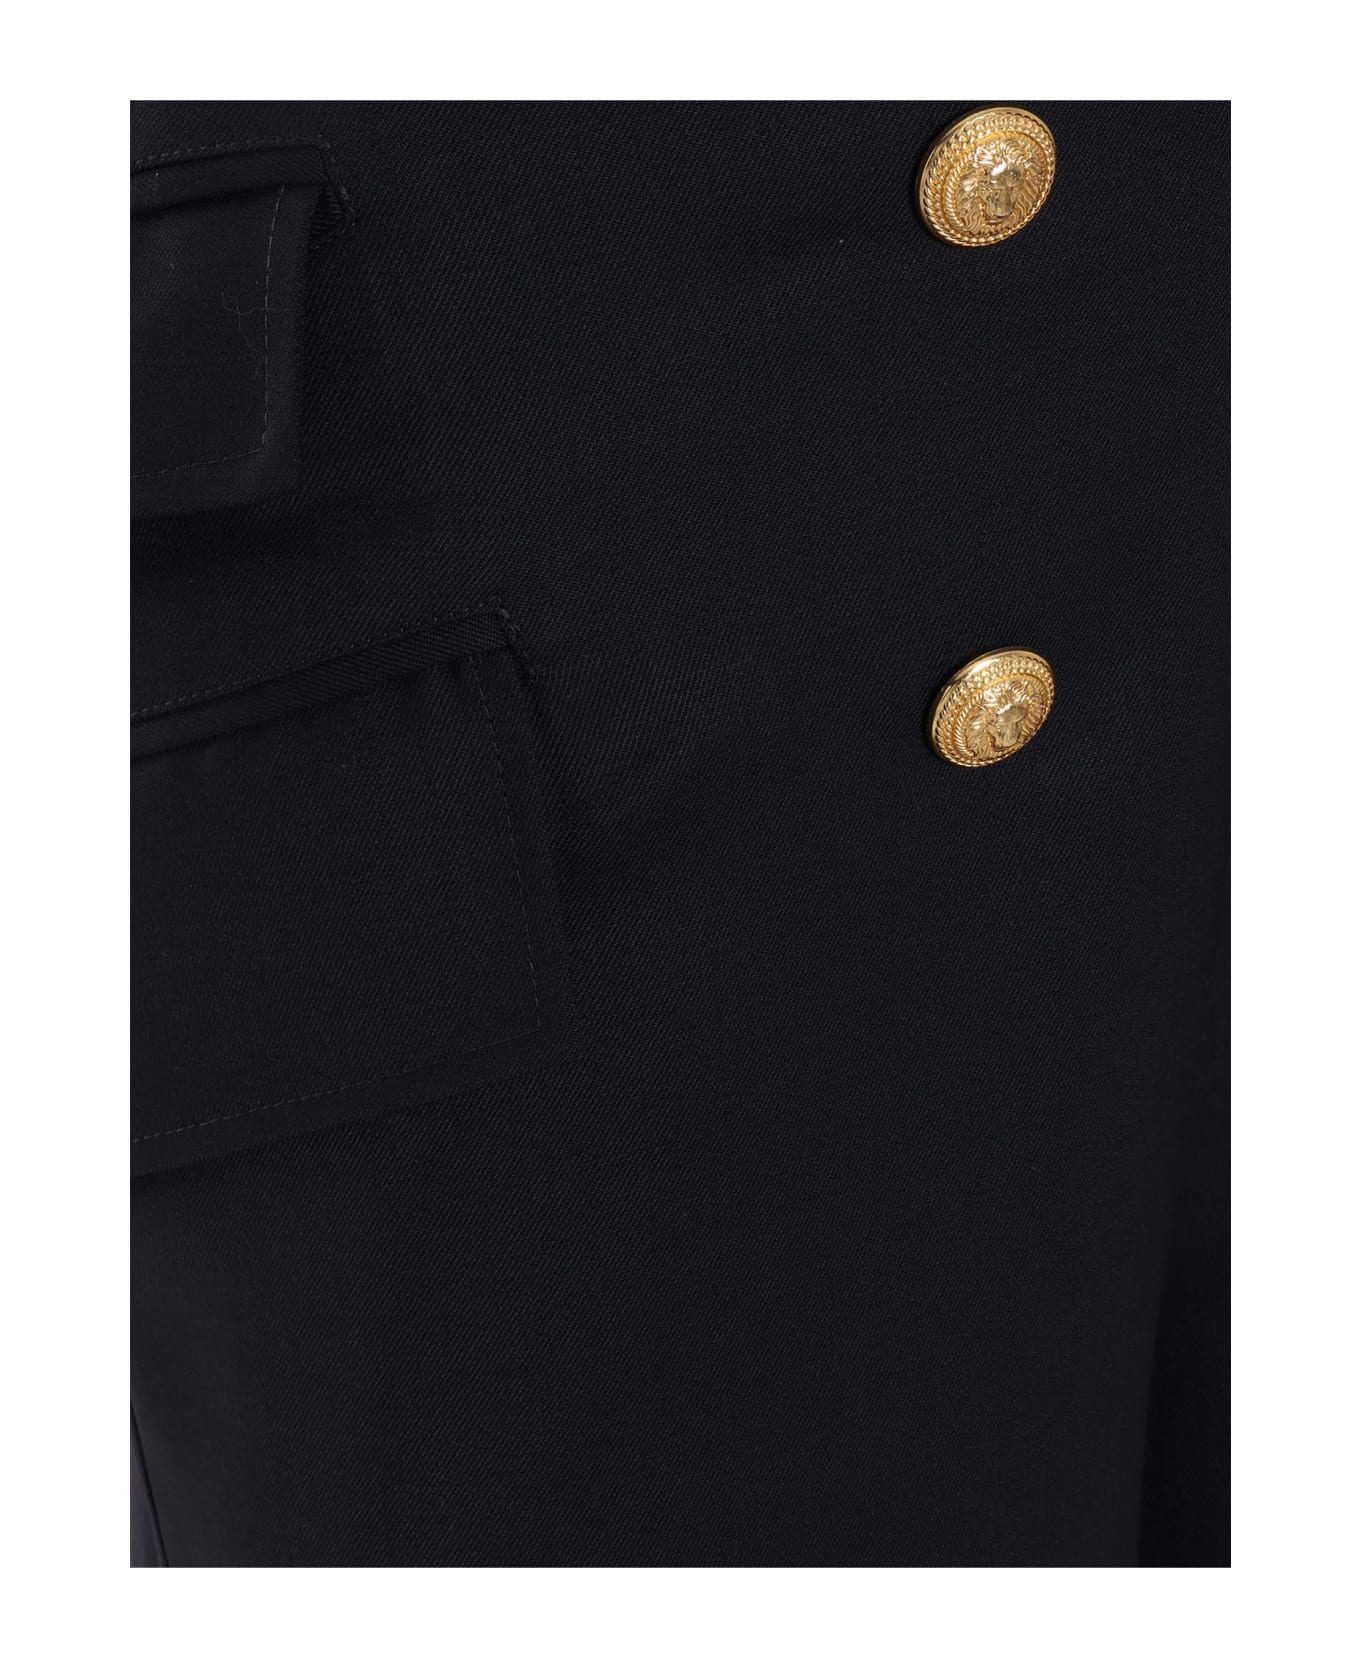 Balmain Black Shorts With Buttons - BLUE